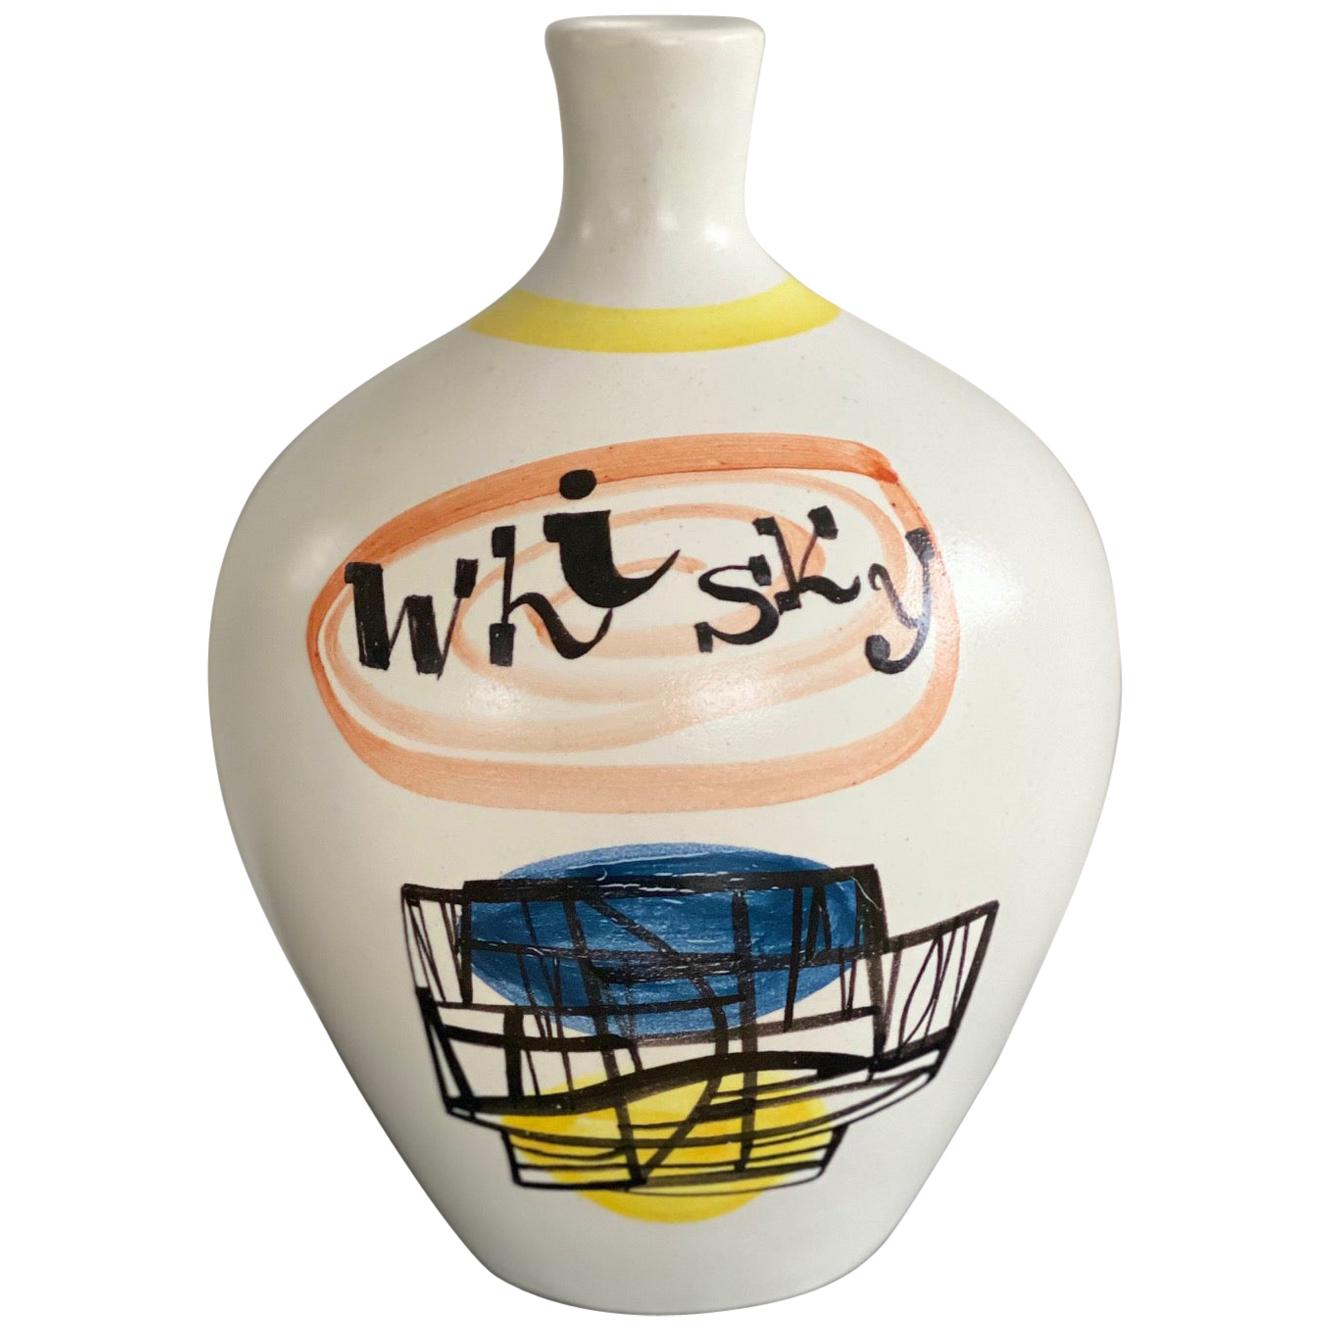 Roger Capron Ceramic "WHISKY" Bottle from Vallauris, 1950s